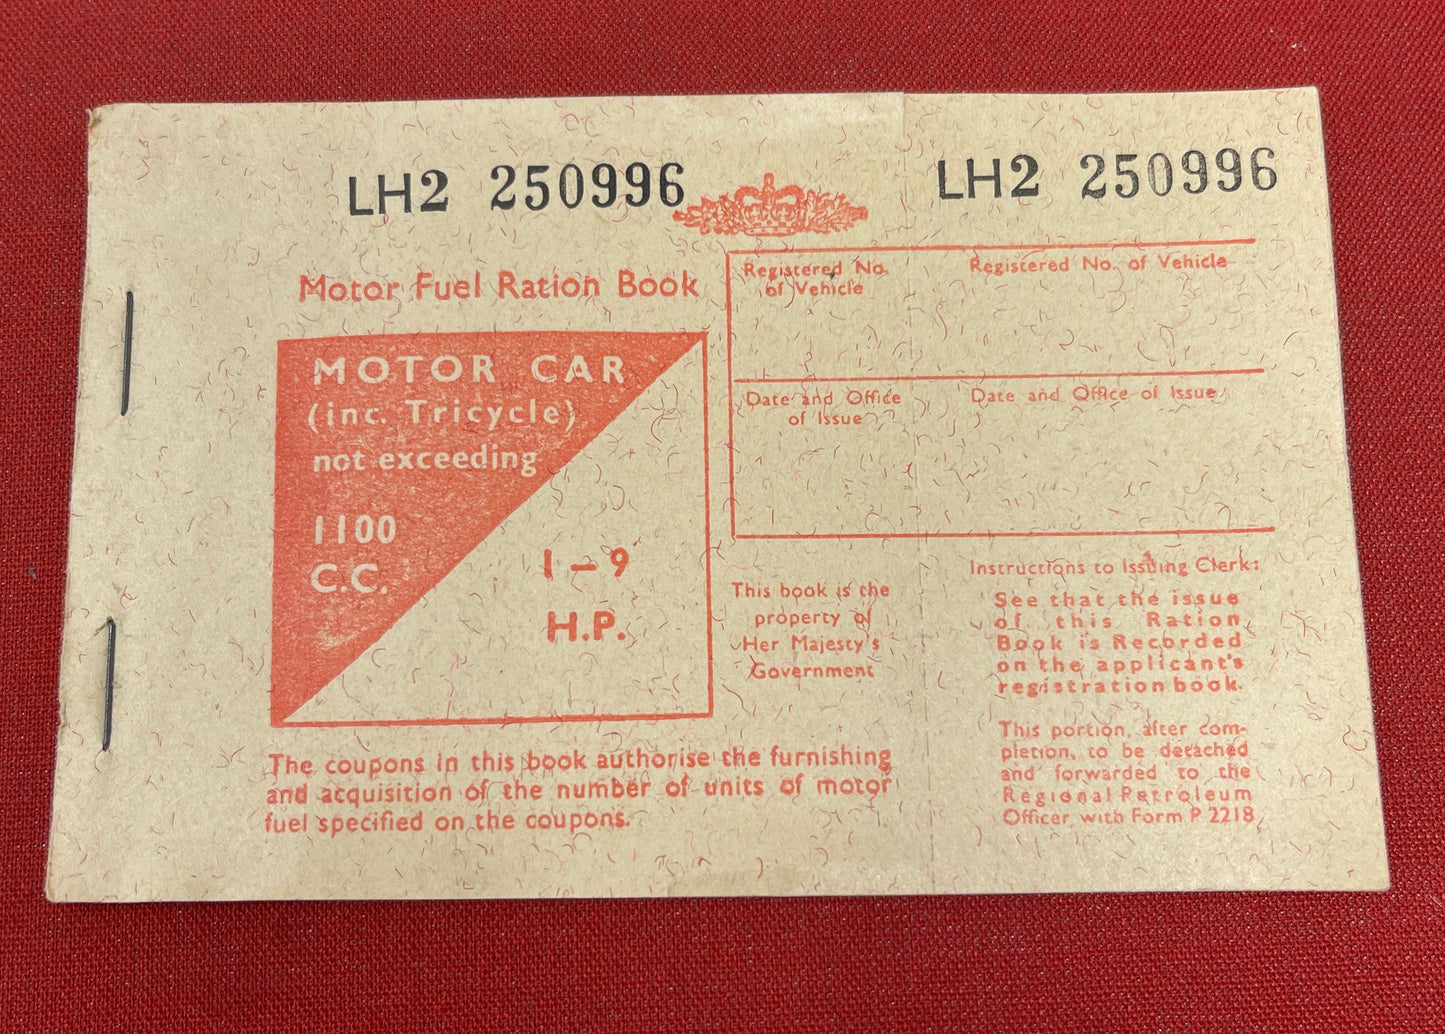 Motor Fuel Ration Book for Motor Car 1100 c.c. 1-9 H.P.